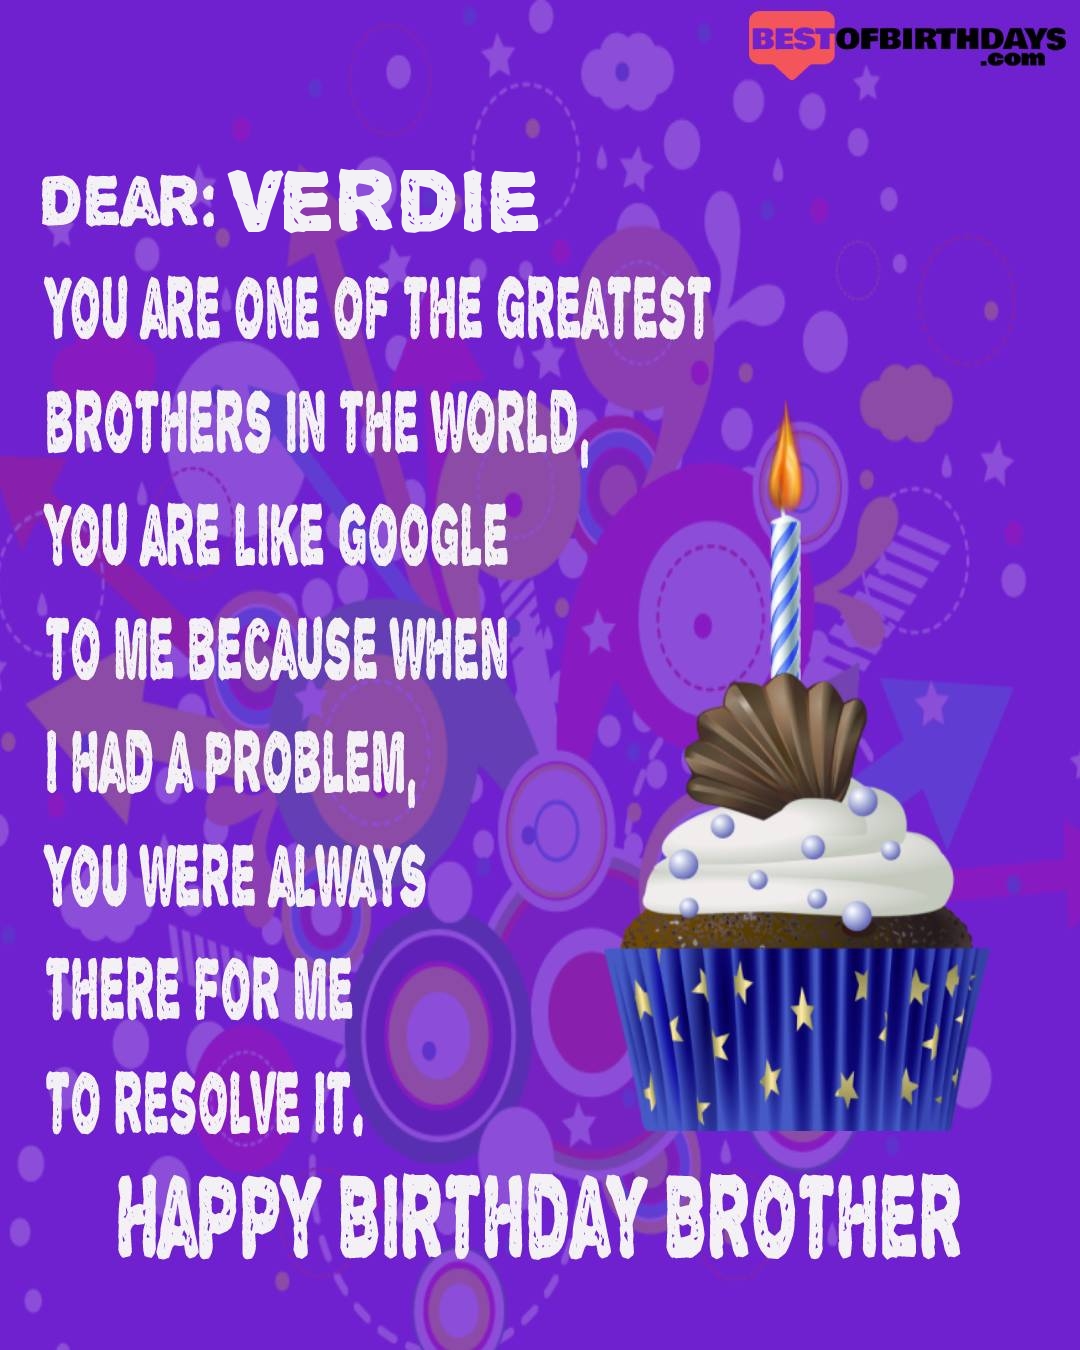 Happy birthday verdie bhai brother bro